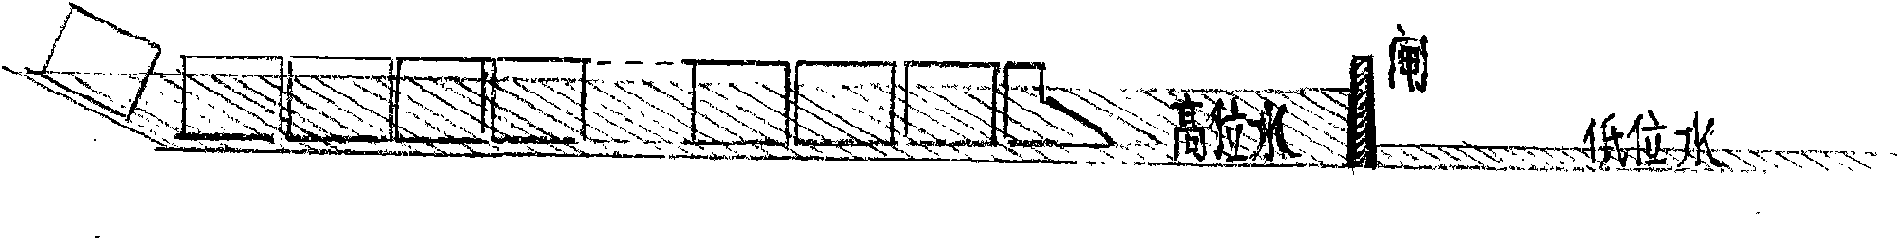 Ship and trough transportation mode for trough transportation system